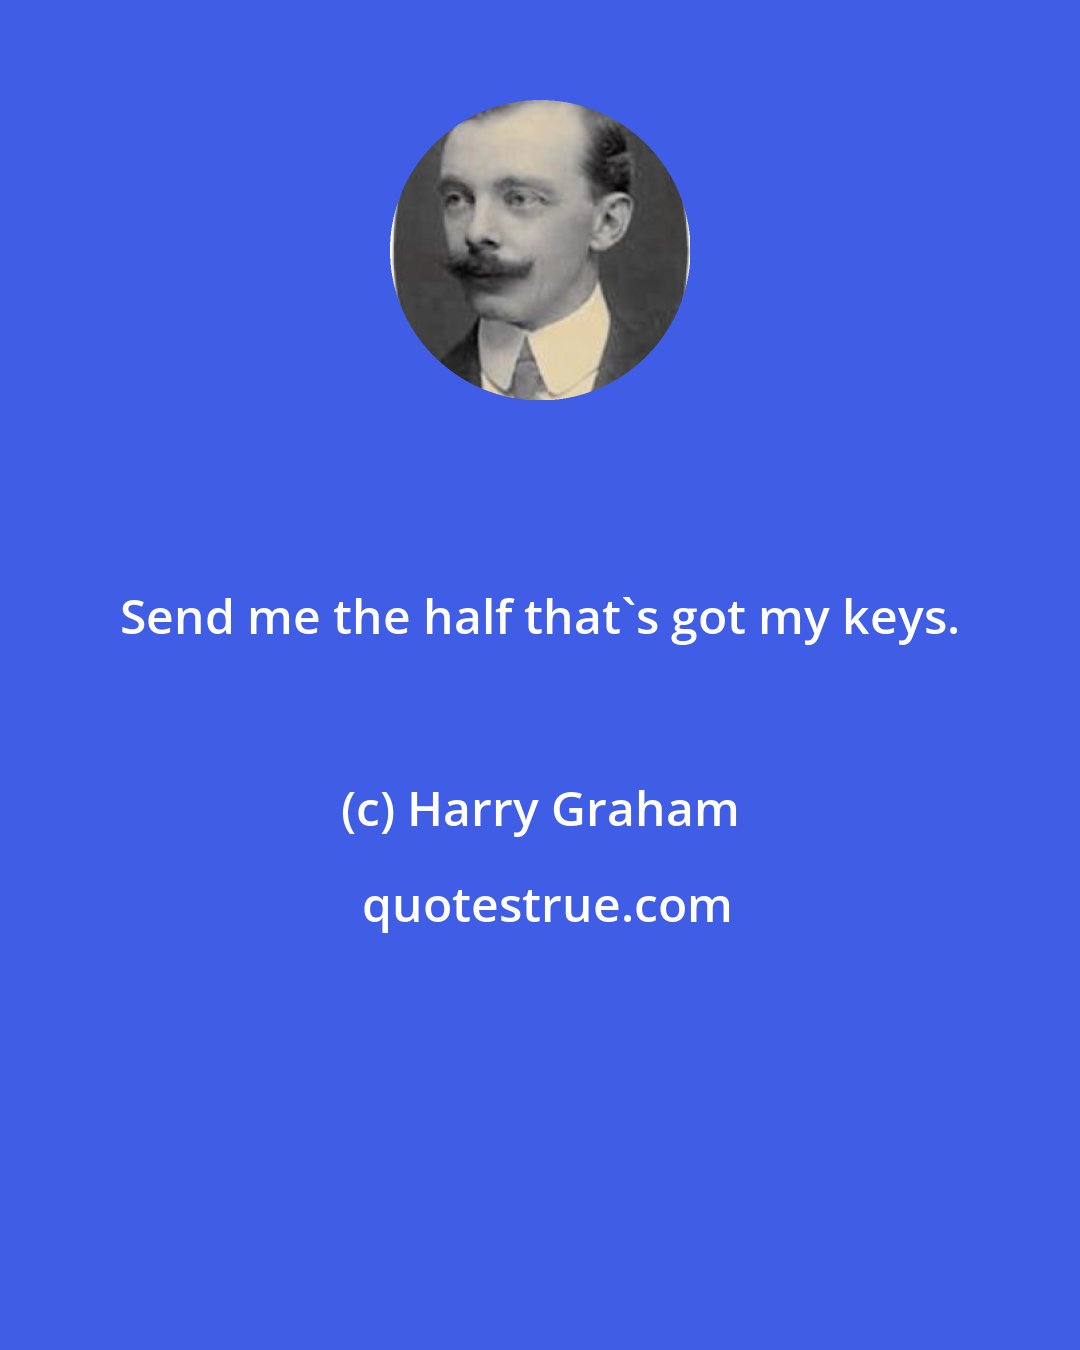 Harry Graham: Send me the half that's got my keys.